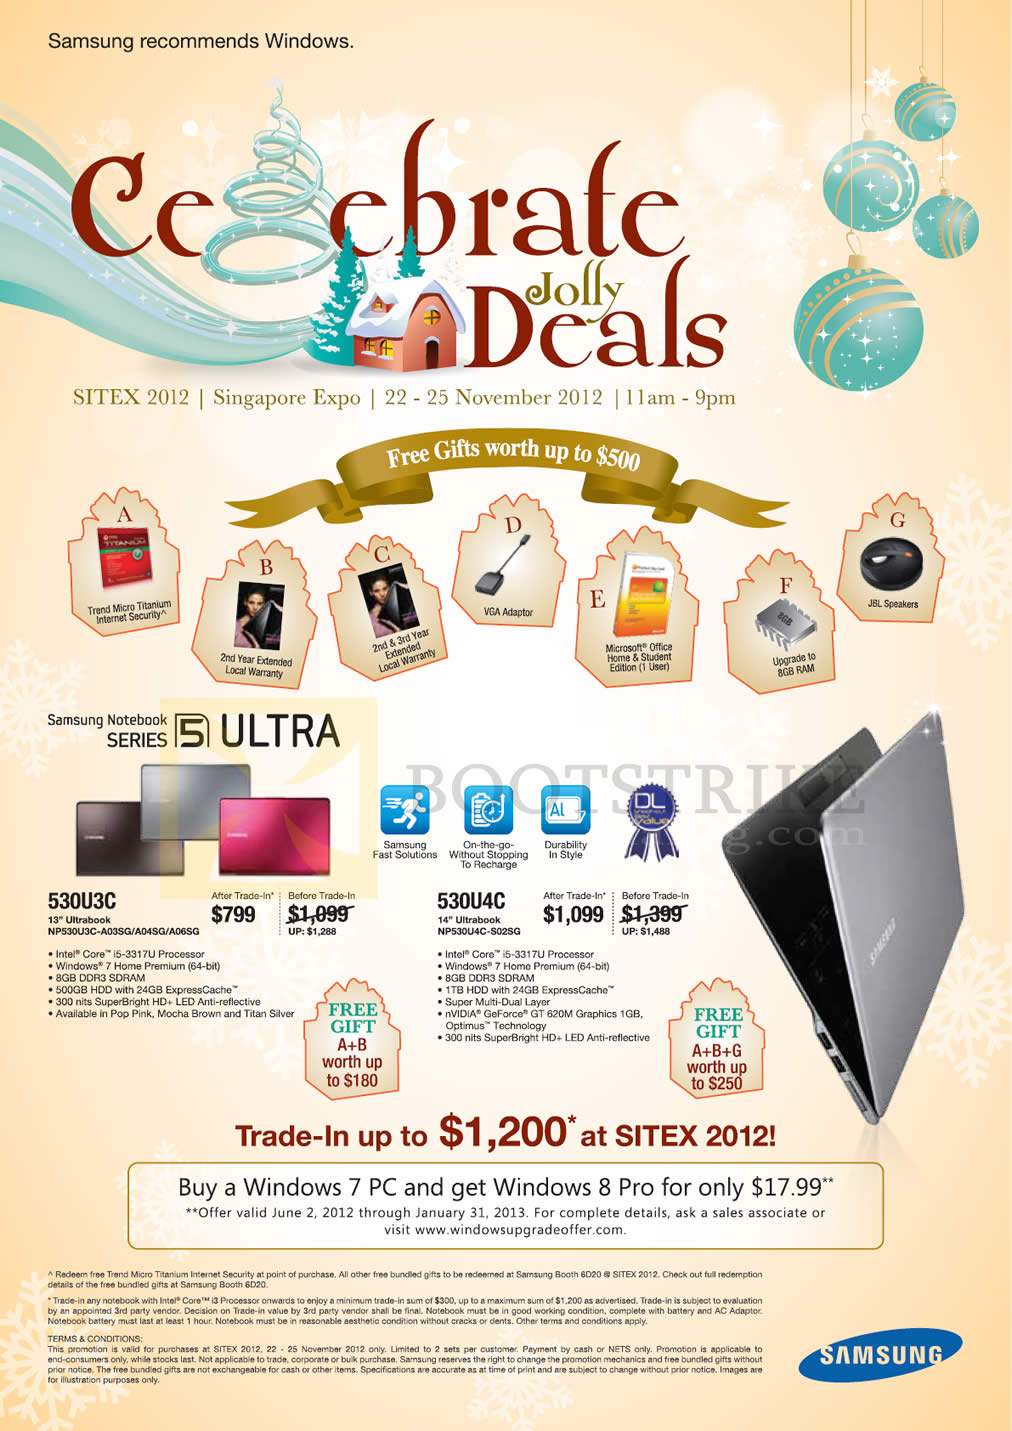 SITEX 2012 price list image brochure of Samsung Notebooks Ultrabook Series 5 NP530U3C-A03SG A04SG A06SG, NP530U4C-S02SG, Trade In